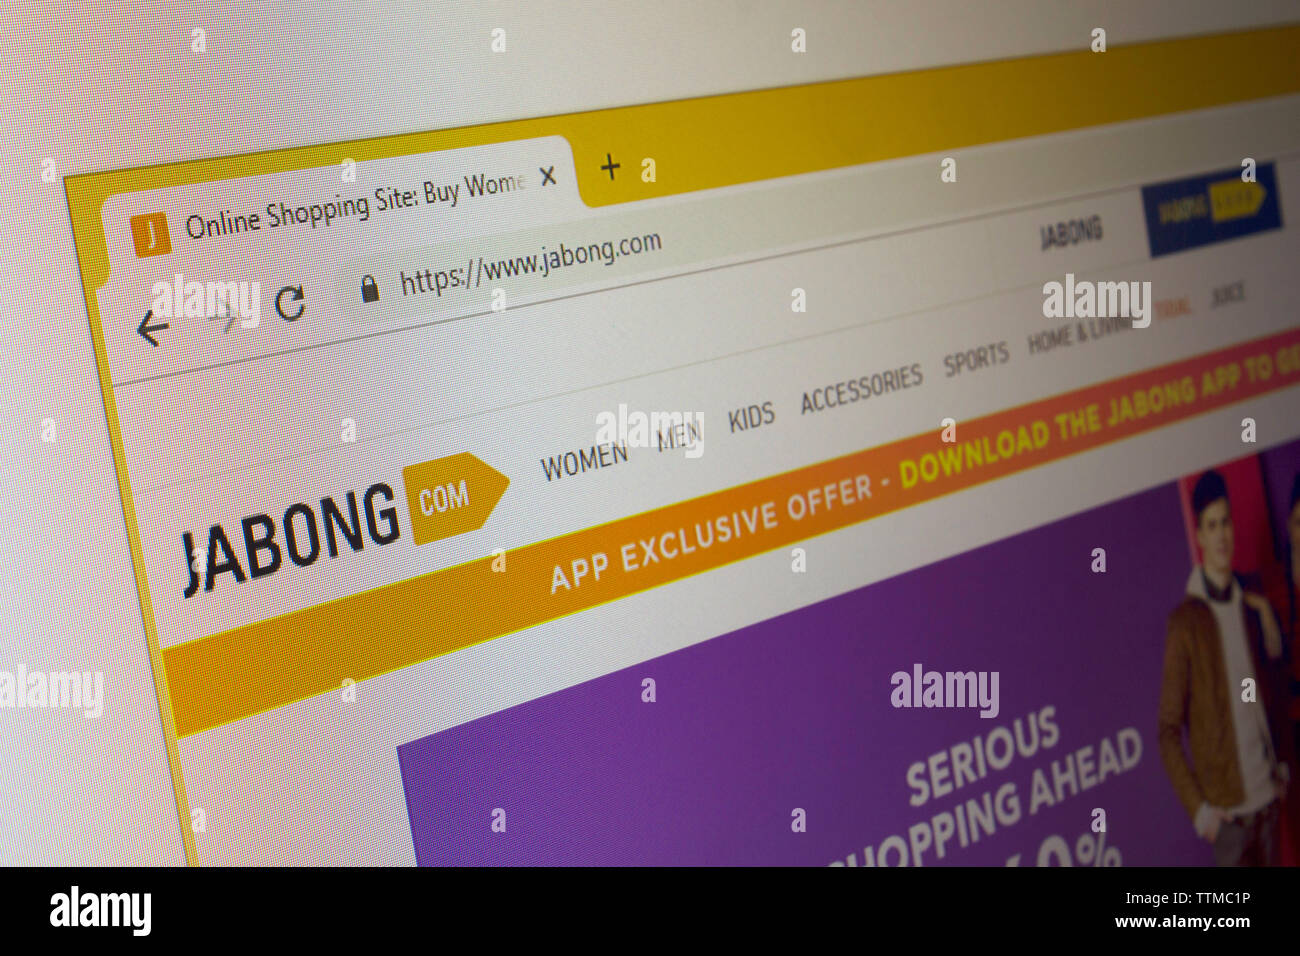 jabong website Stock Photo